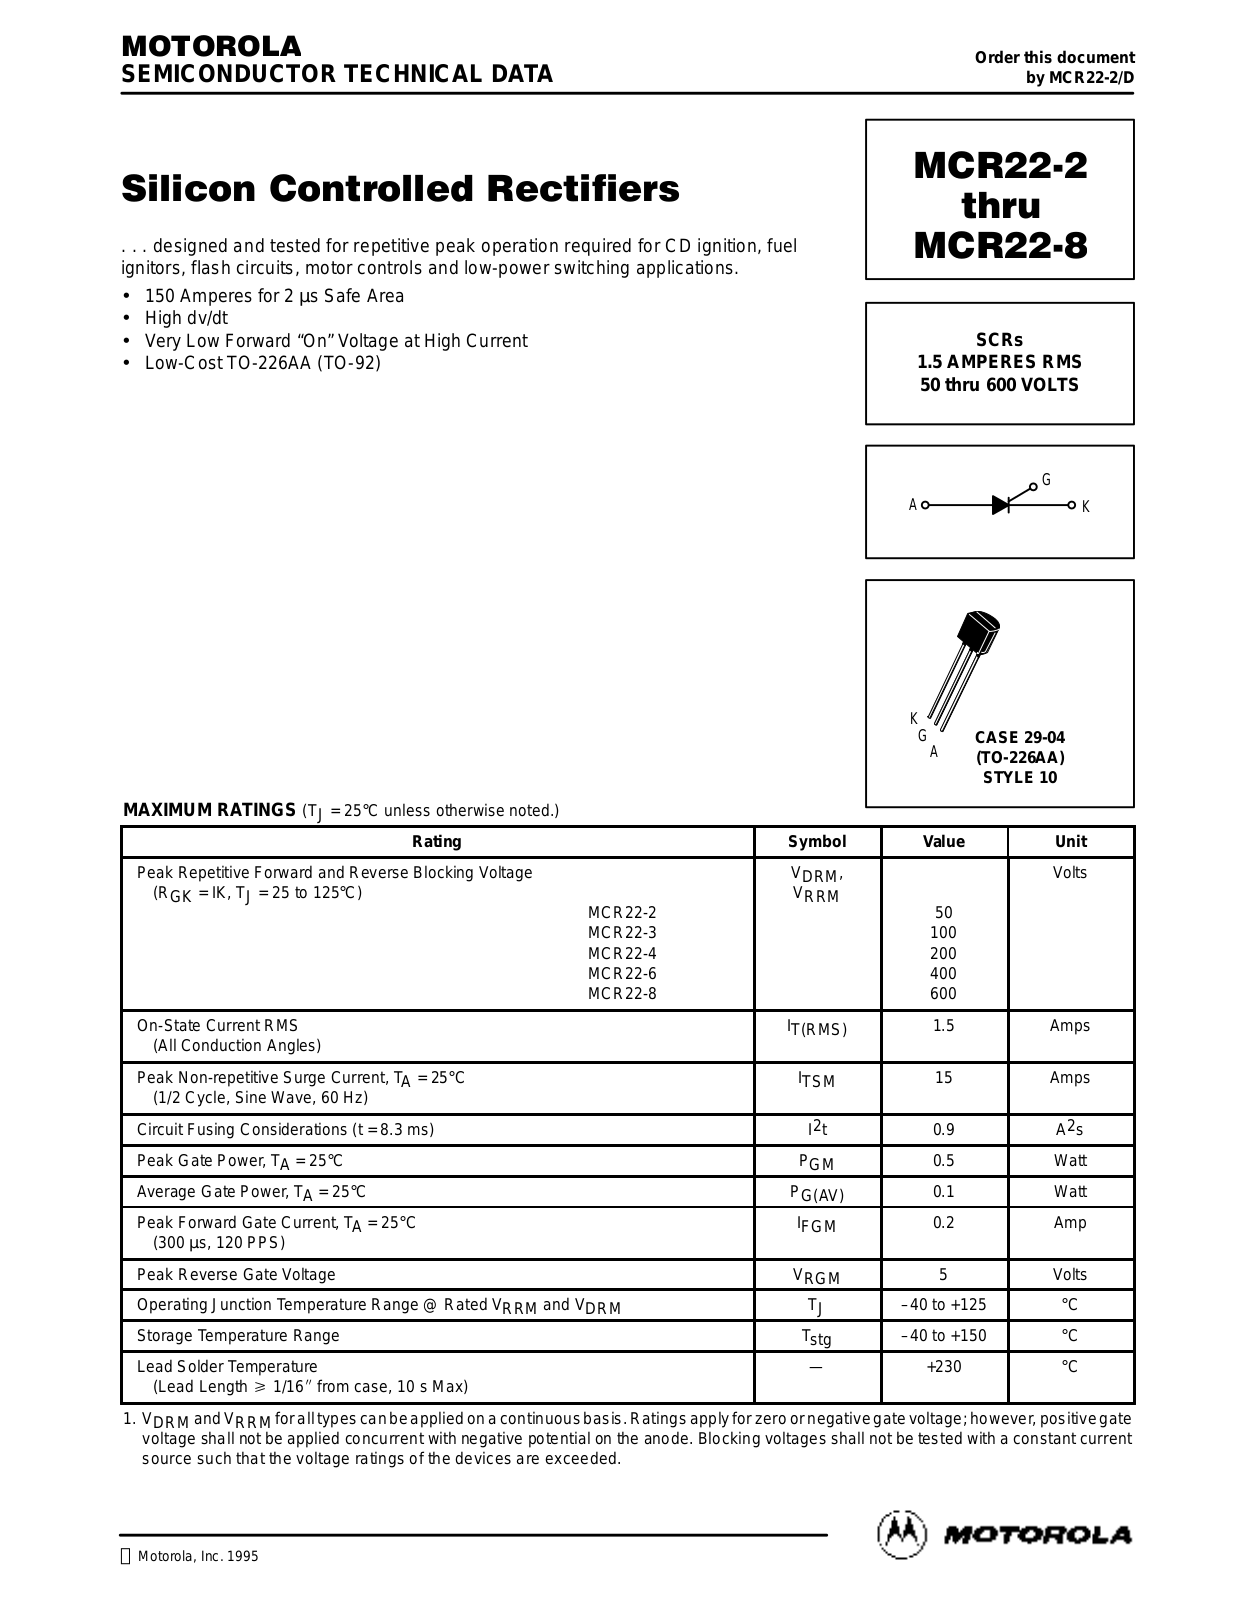 Motorola MCR22-4, MCR22-8, MCR22-2, MCR22-3 Datasheet